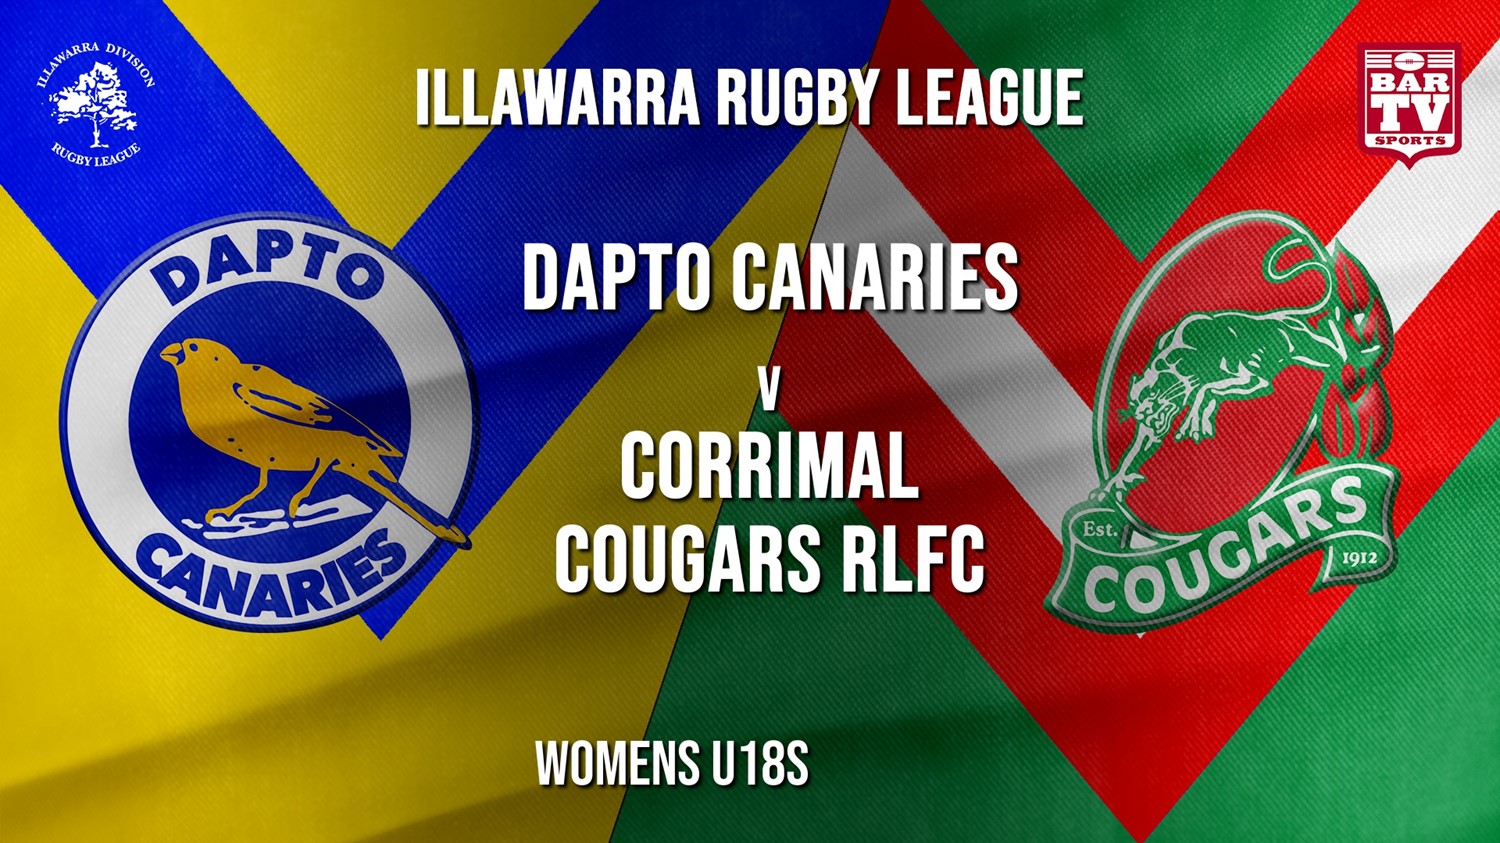 IRL Womens U18s - Dapto Canaries v Corrimal Cougars RLFC Minigame Slate Image